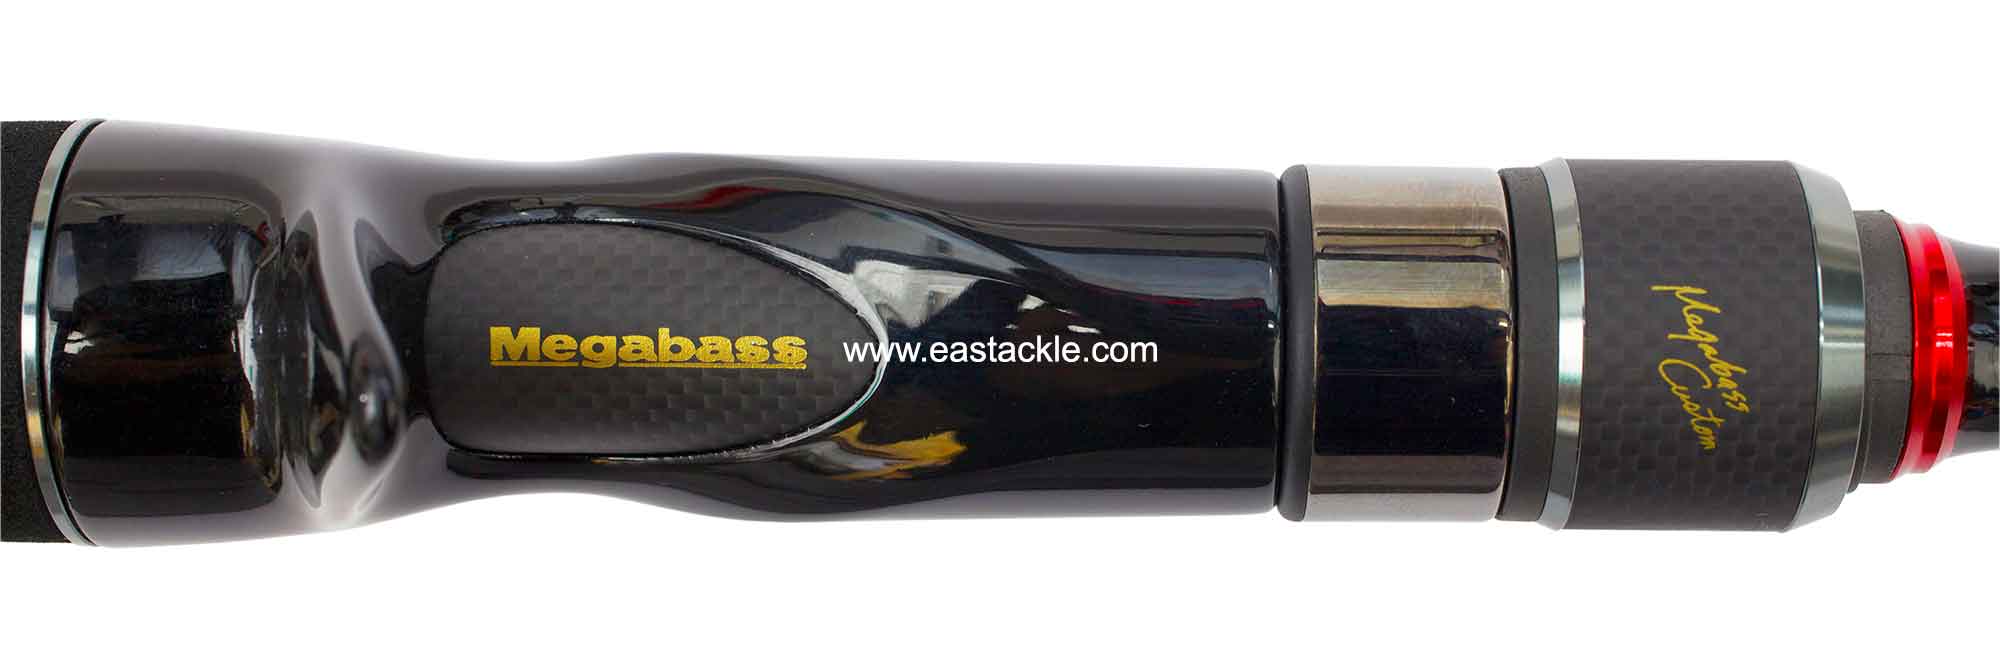 Megabass - Racing Condition World Edition - RCC-762H - Bait Casting Rod - Reel Seat (Bottom View)